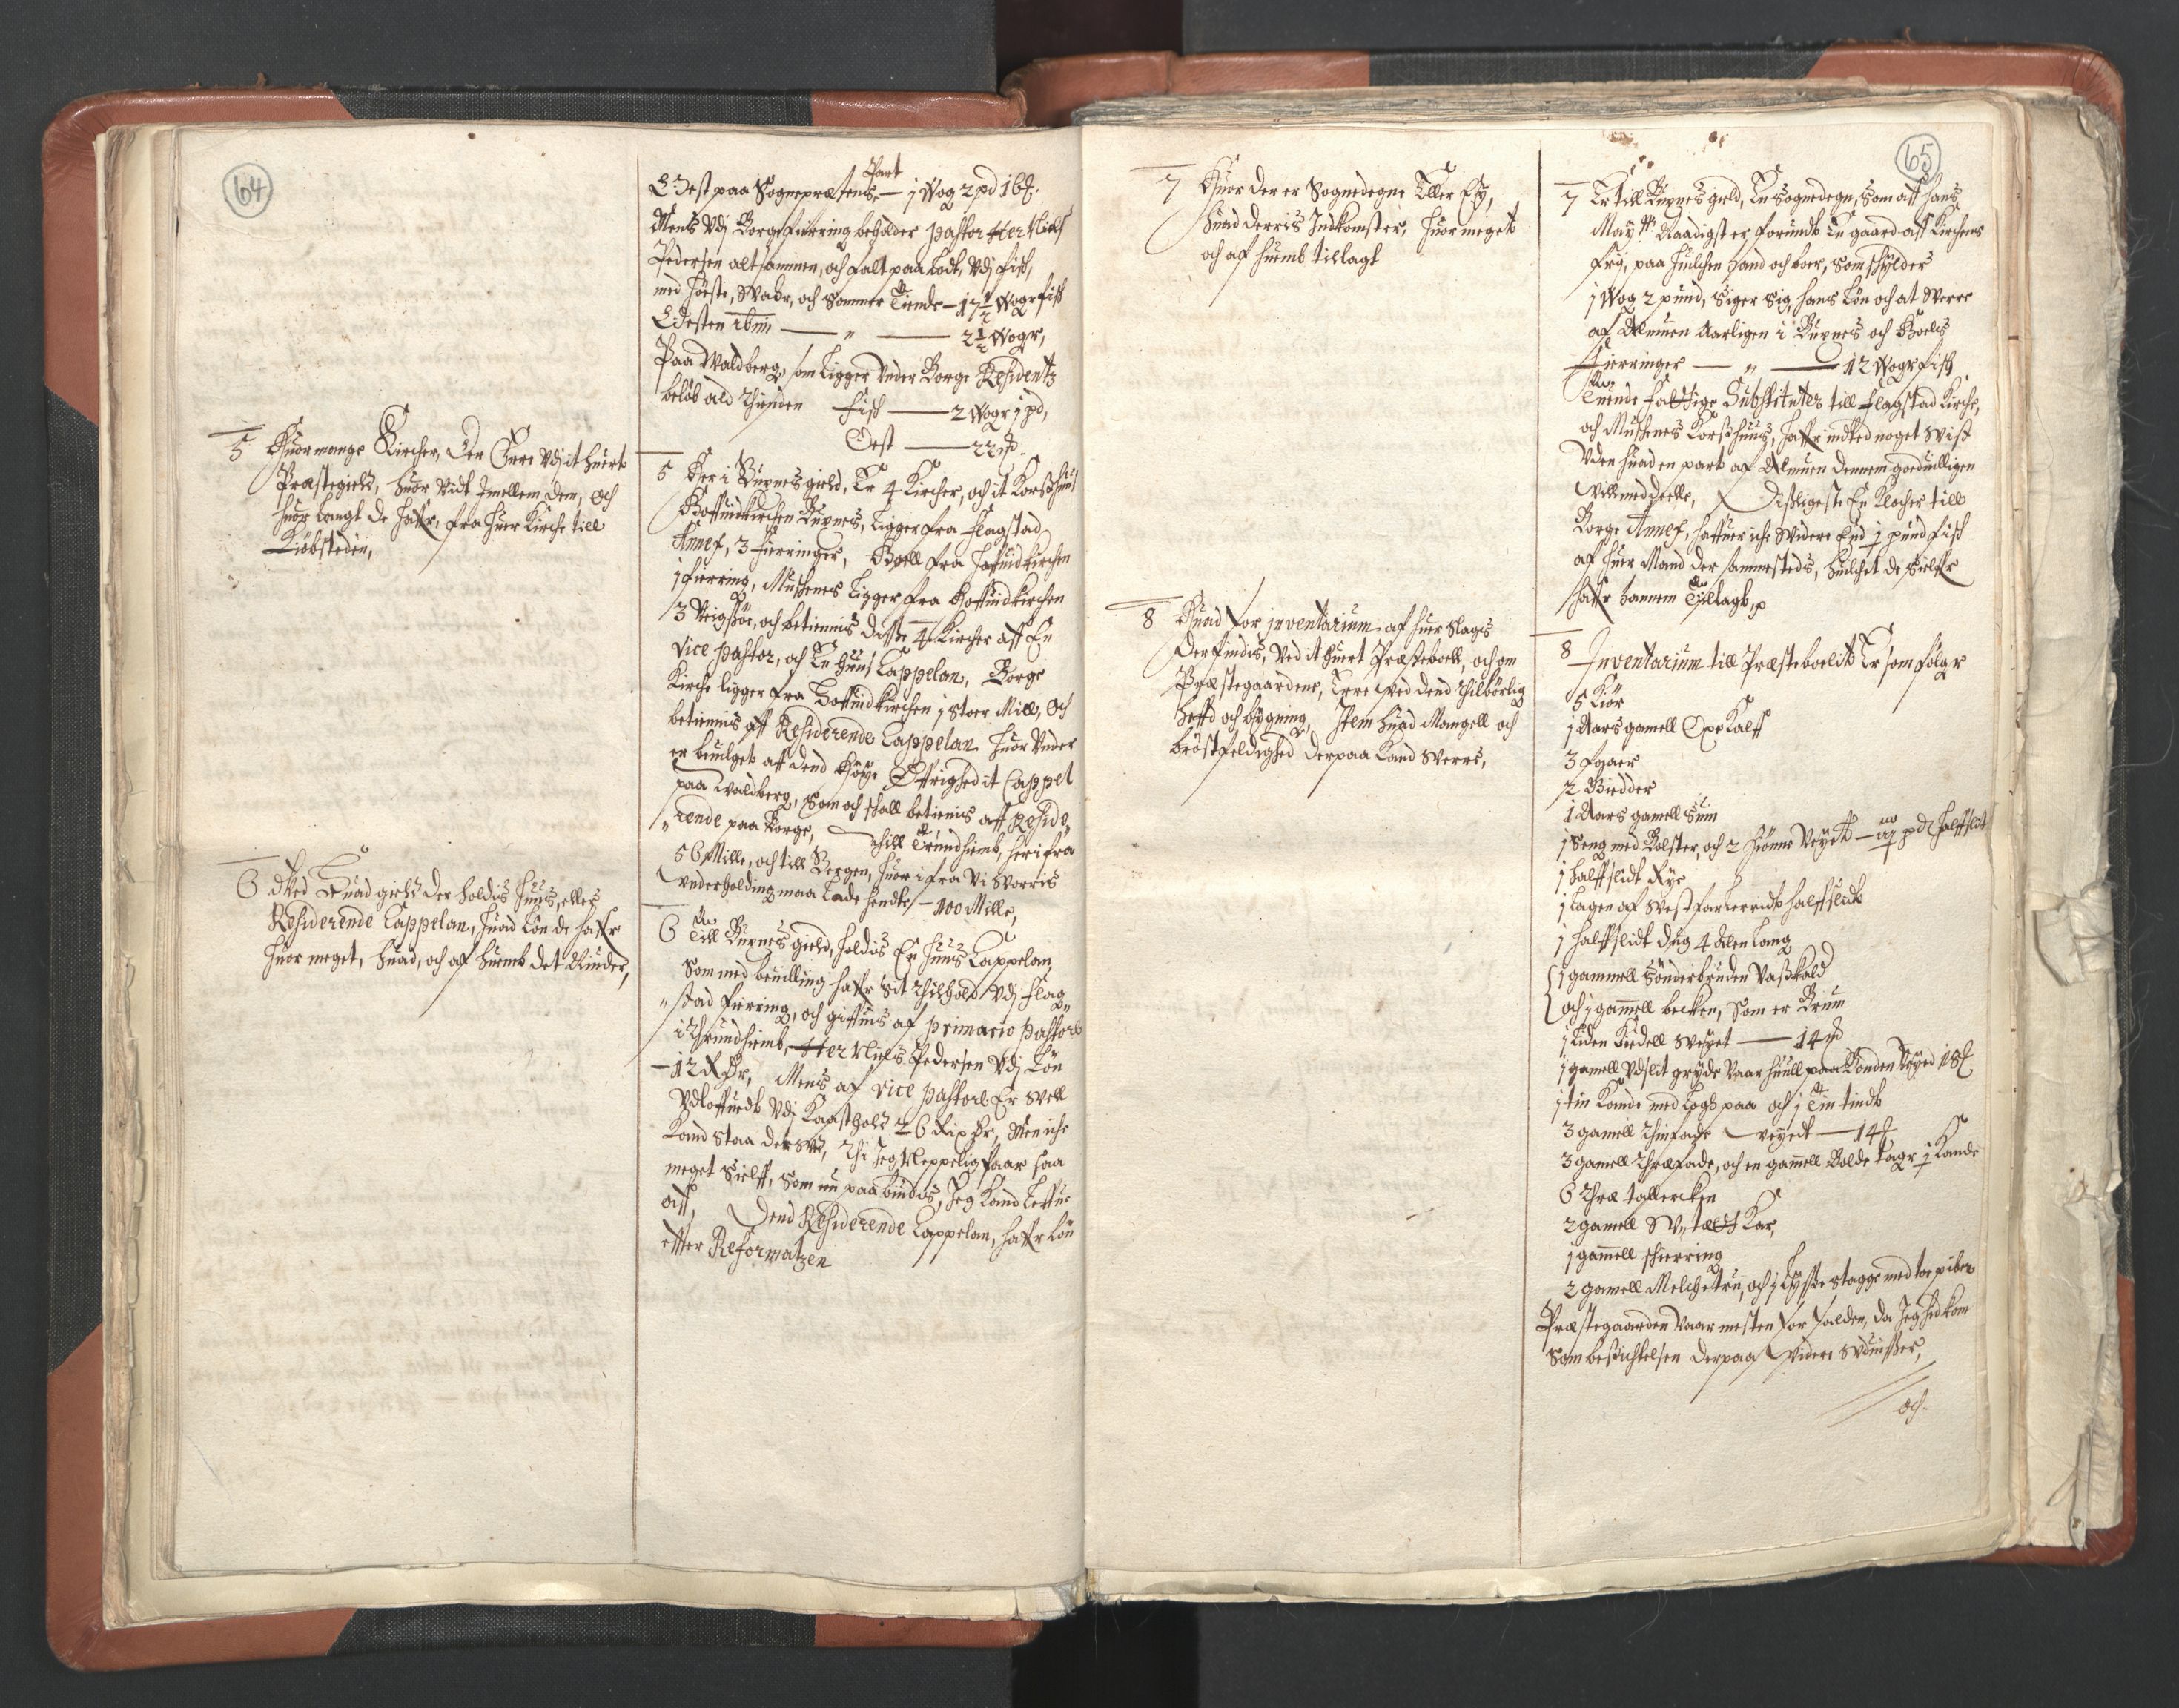 RA, Vicar's Census 1664-1666, no. 36: Lofoten and Vesterålen deanery, Senja deanery and Troms deanery, 1664-1666, p. 64-65